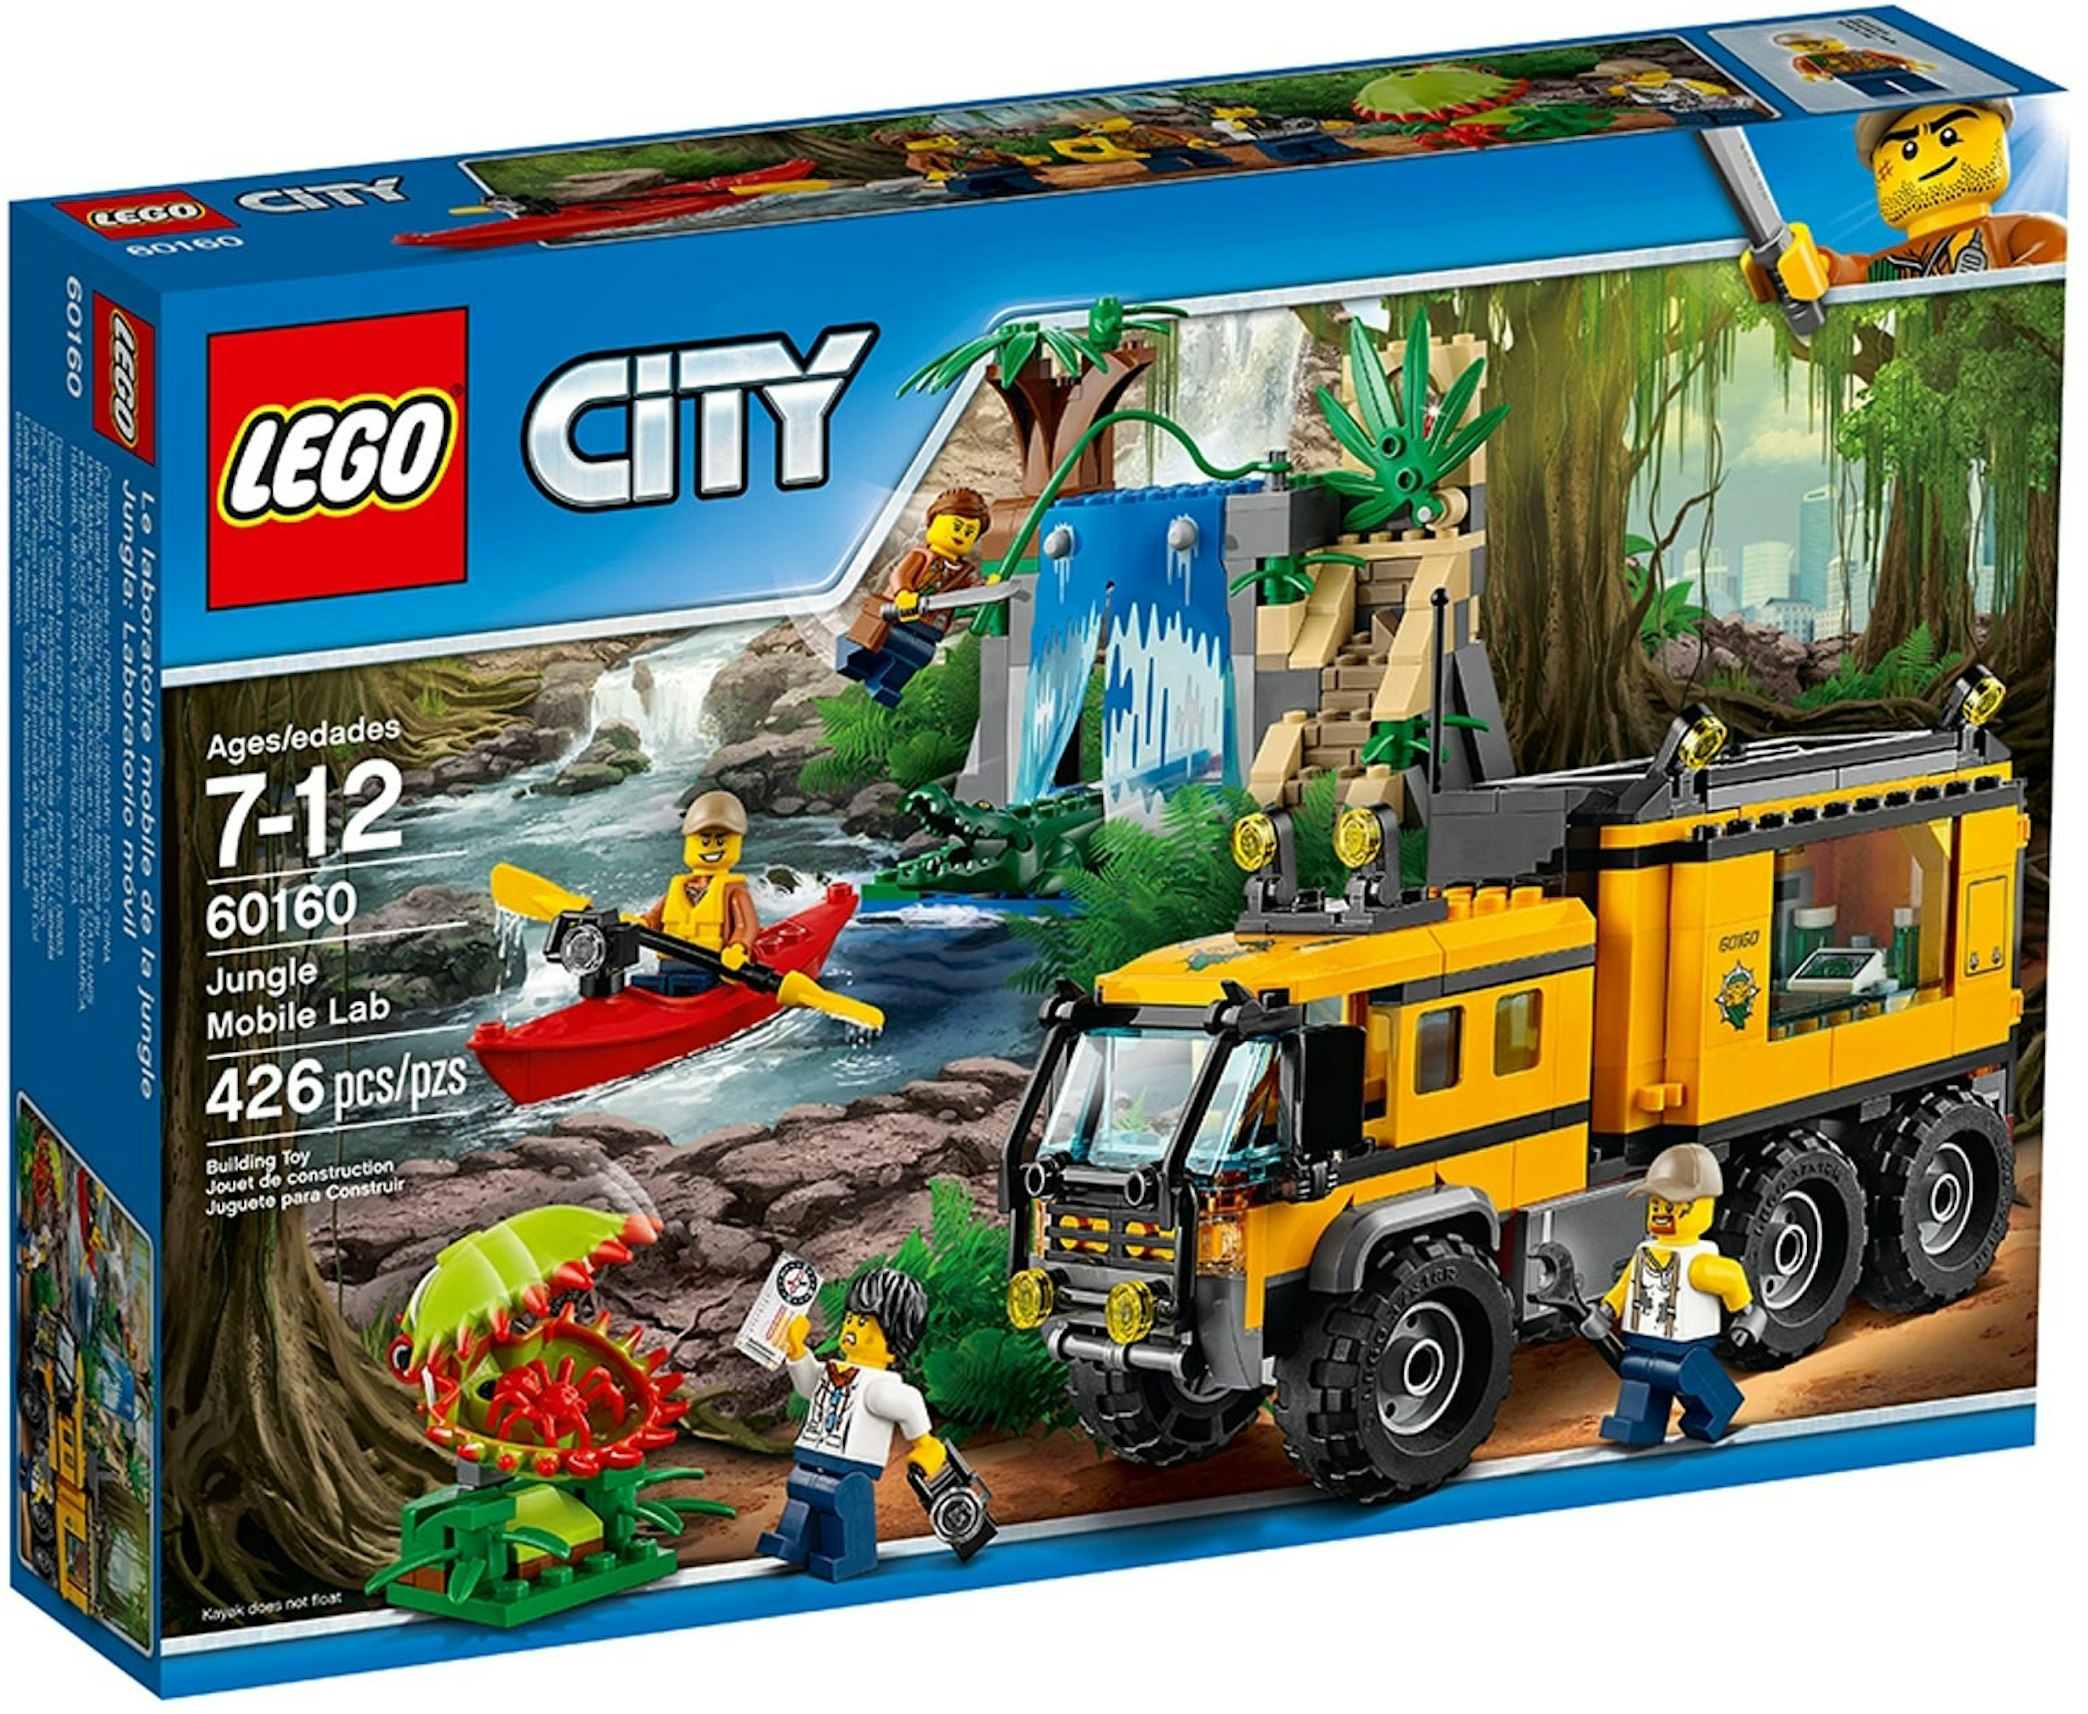 City Jungle Mobile Lab Set 60160 -